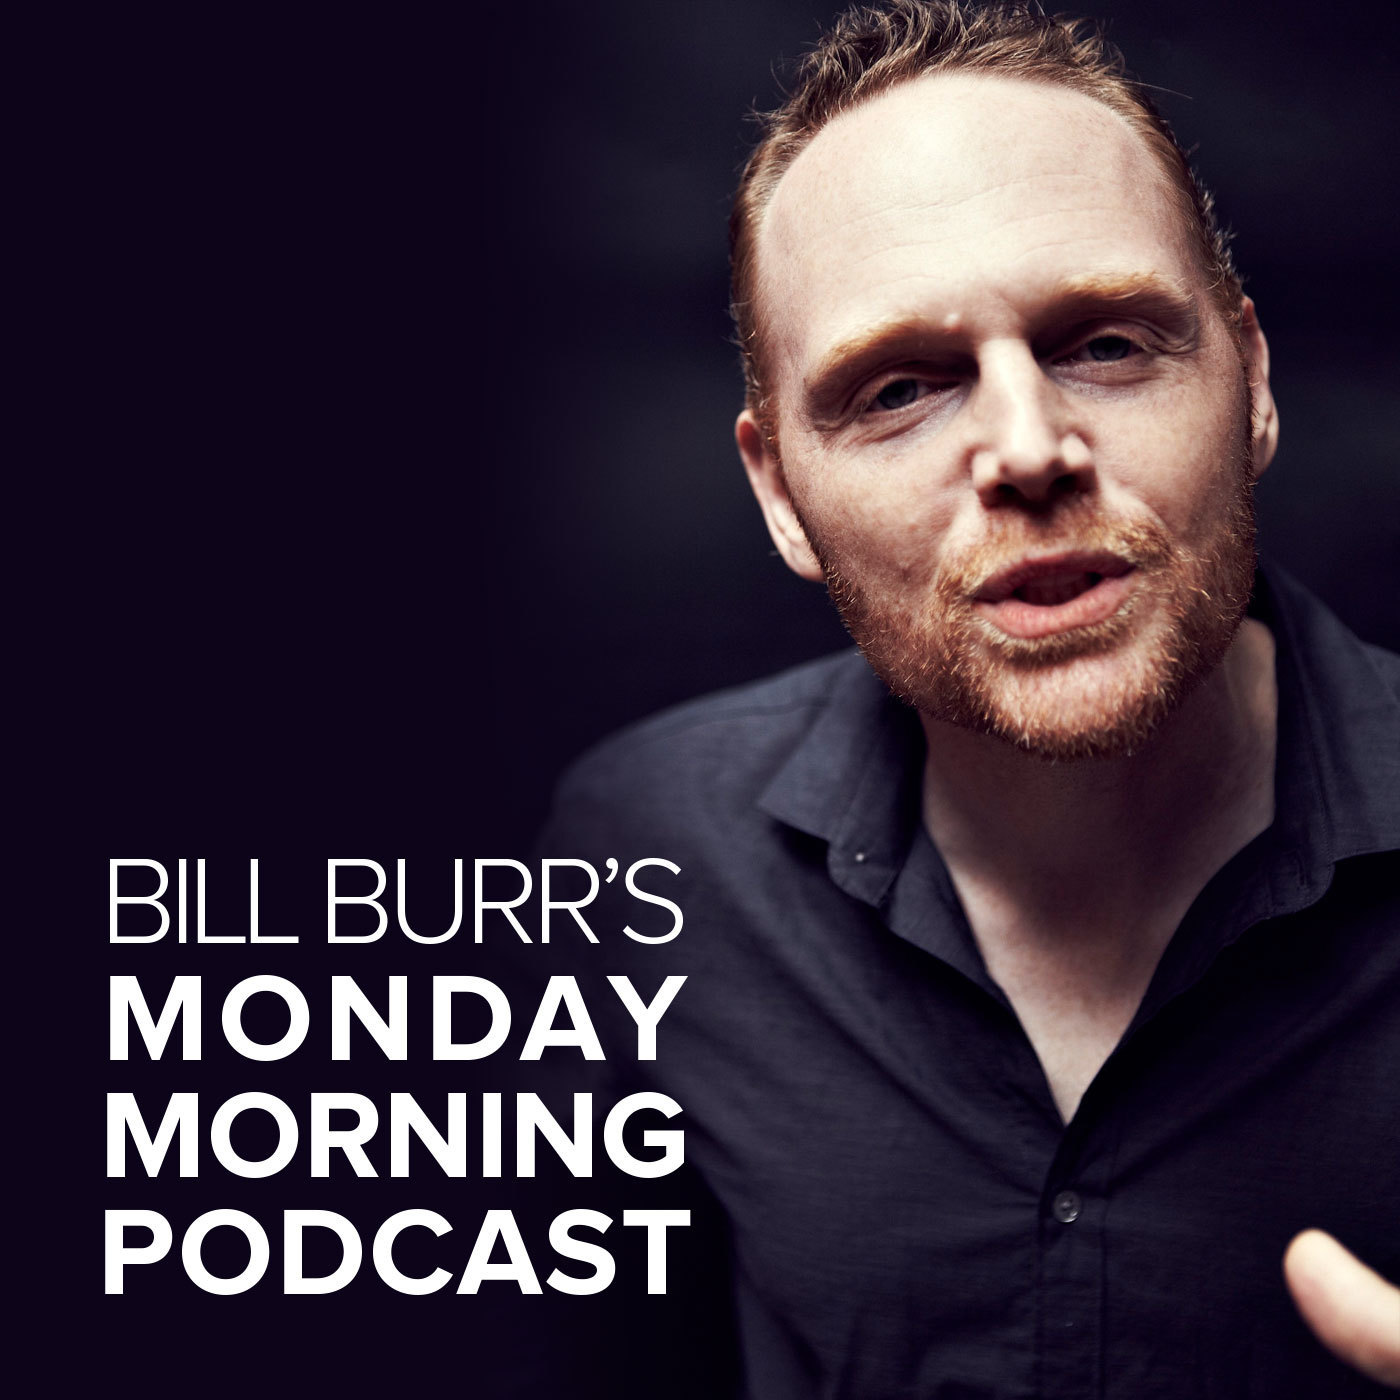 Monday Morning Podcast 11-16-15